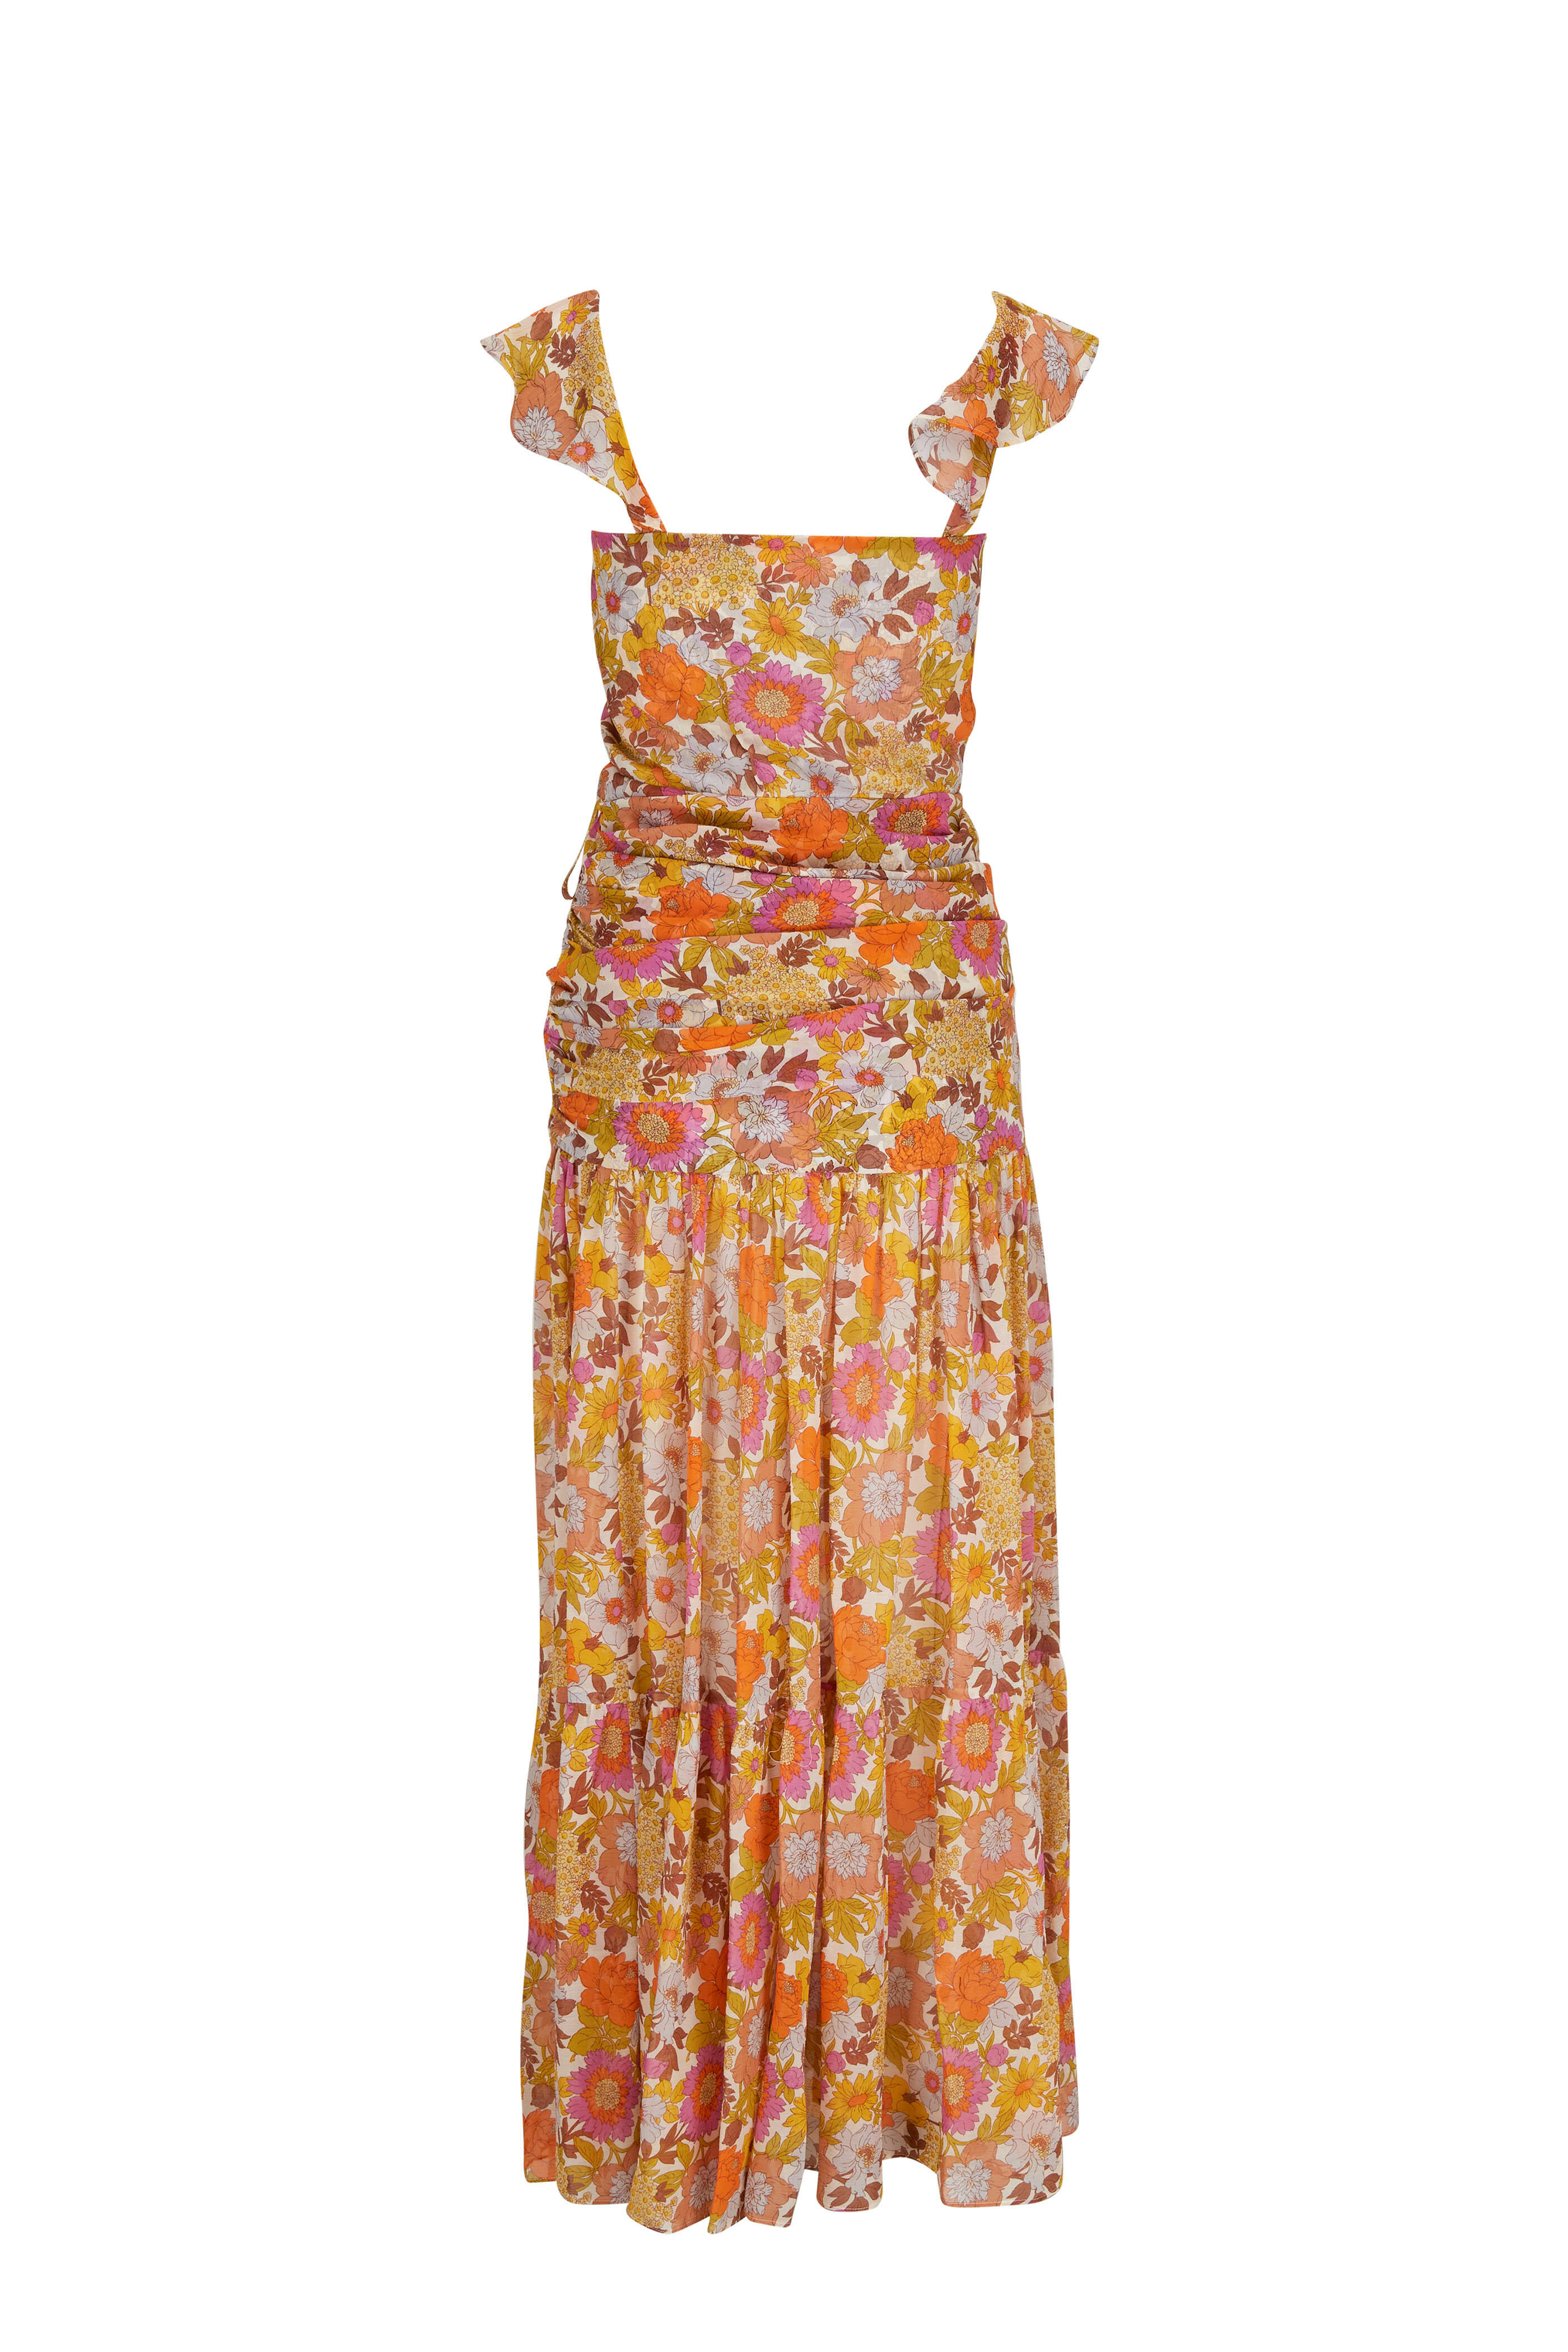 Veronica Beard - Alannah Stone Multicolor Floral Print Dress